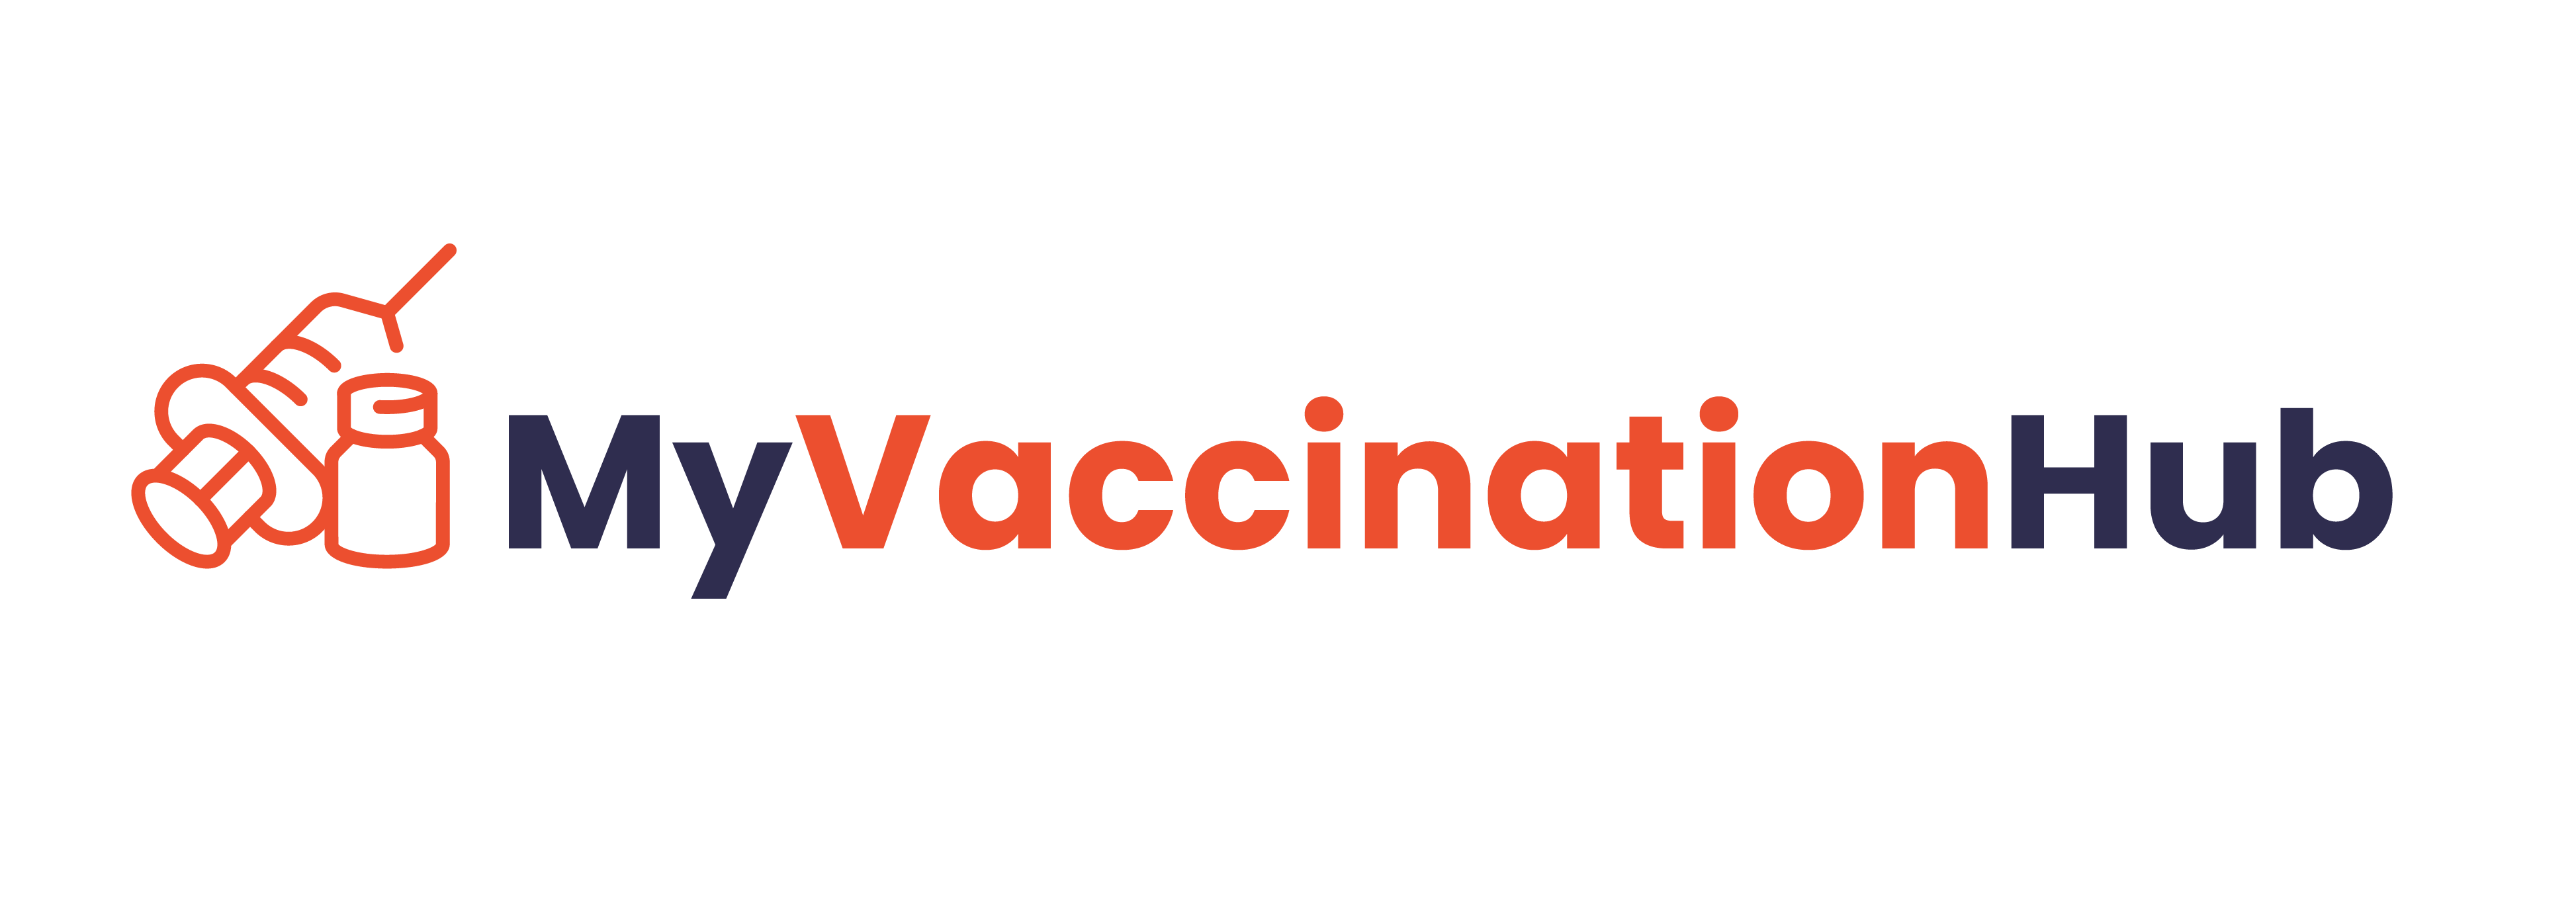 My Vaccination Hub-logo-01